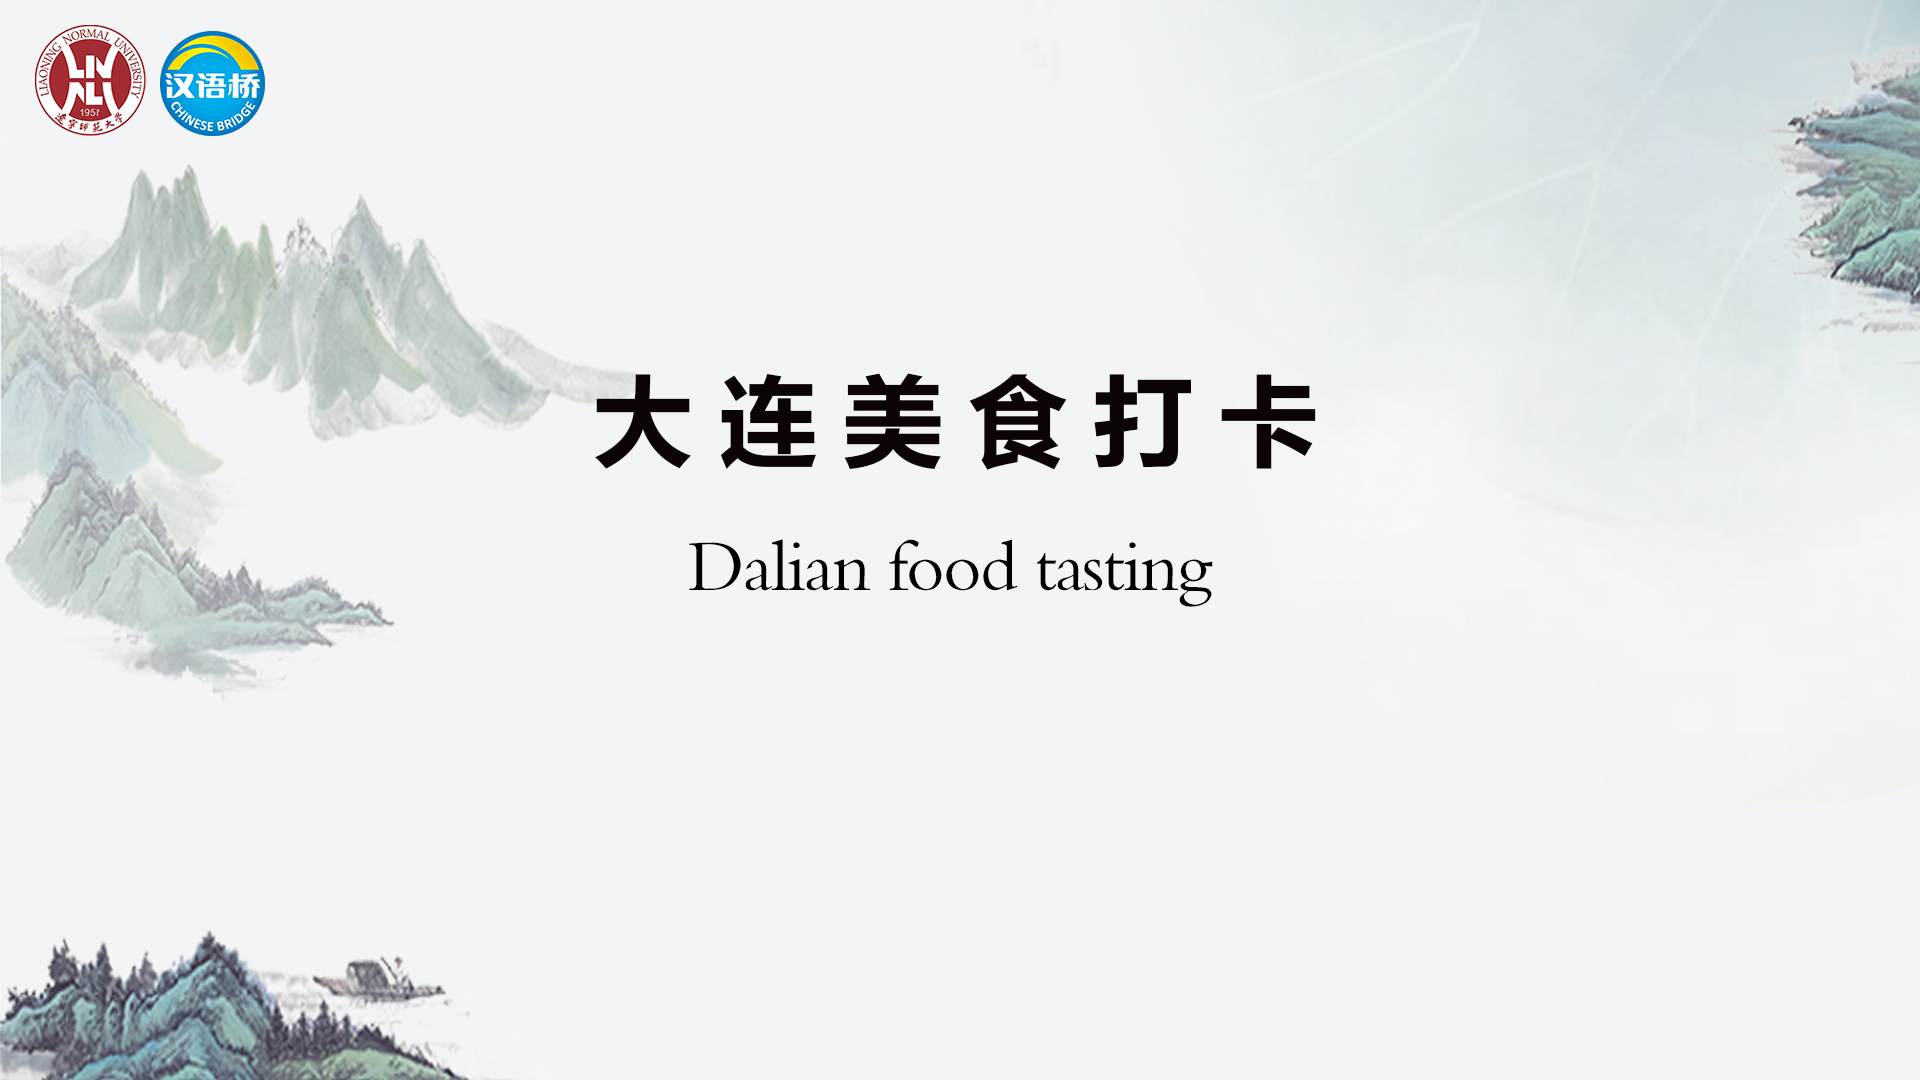 Taste of Dalian Cuisine